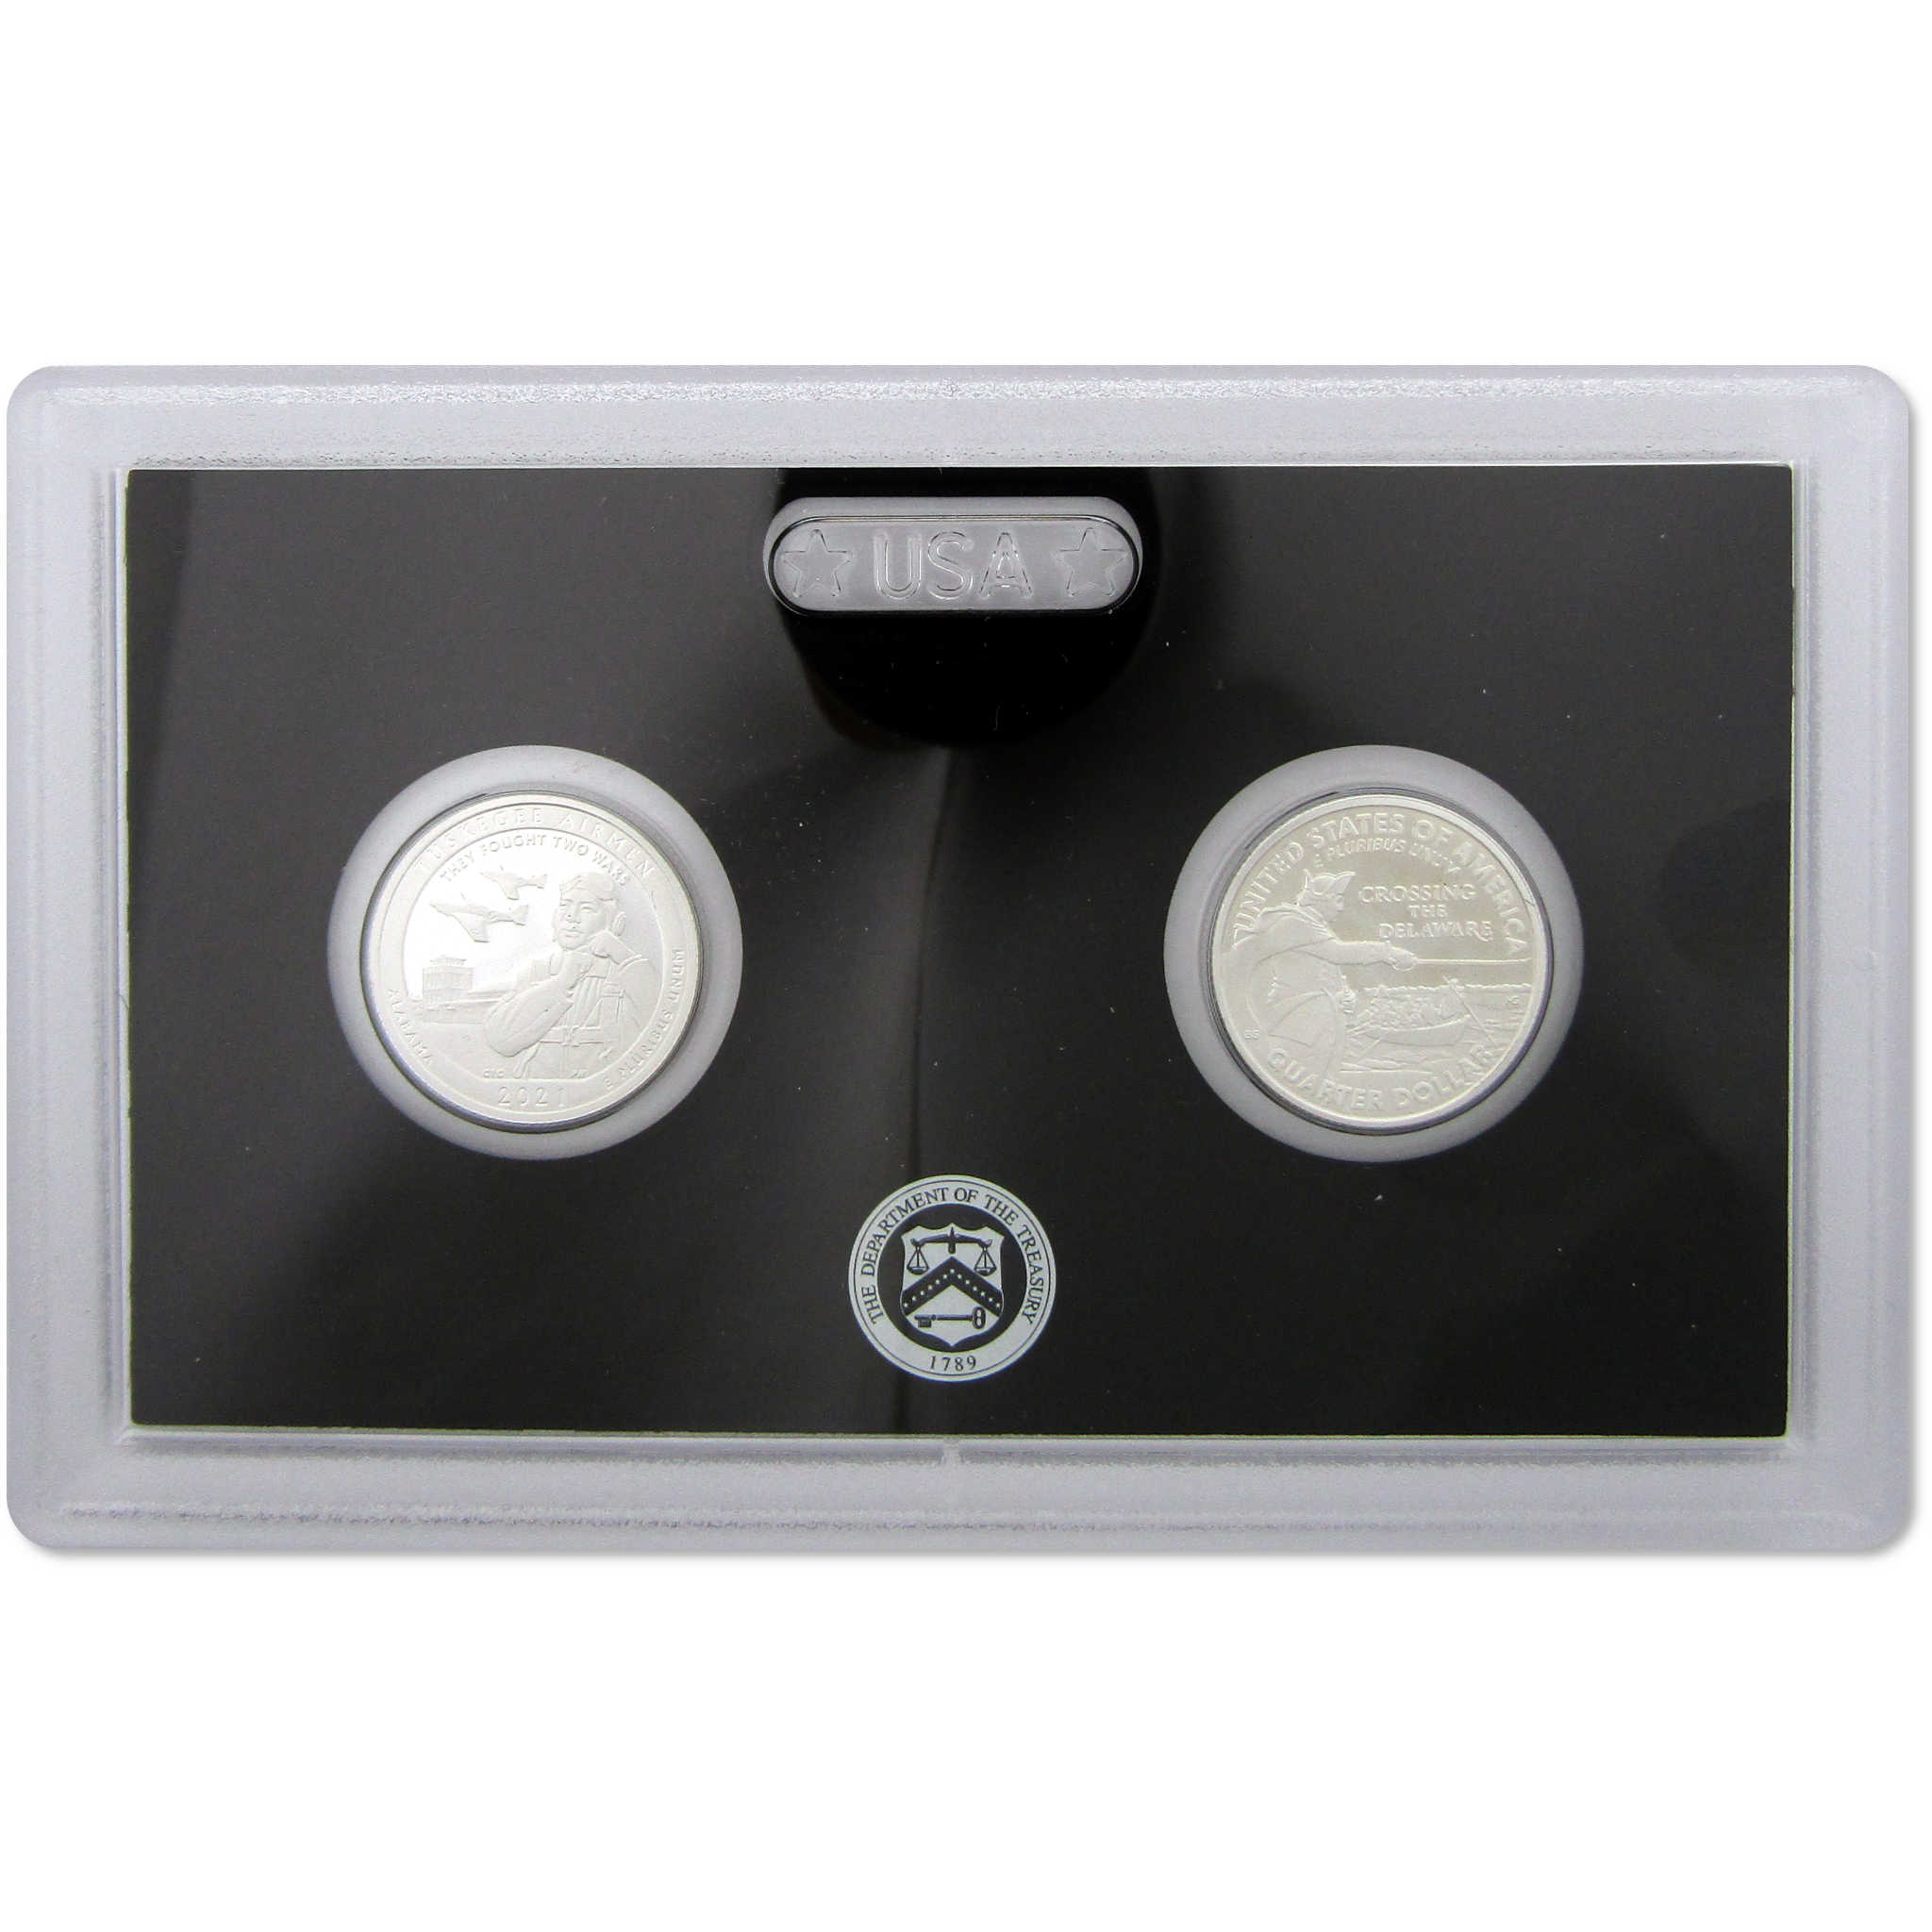 2021 Silver Proof Set U.S Mint Original Government Packaging OGP COA